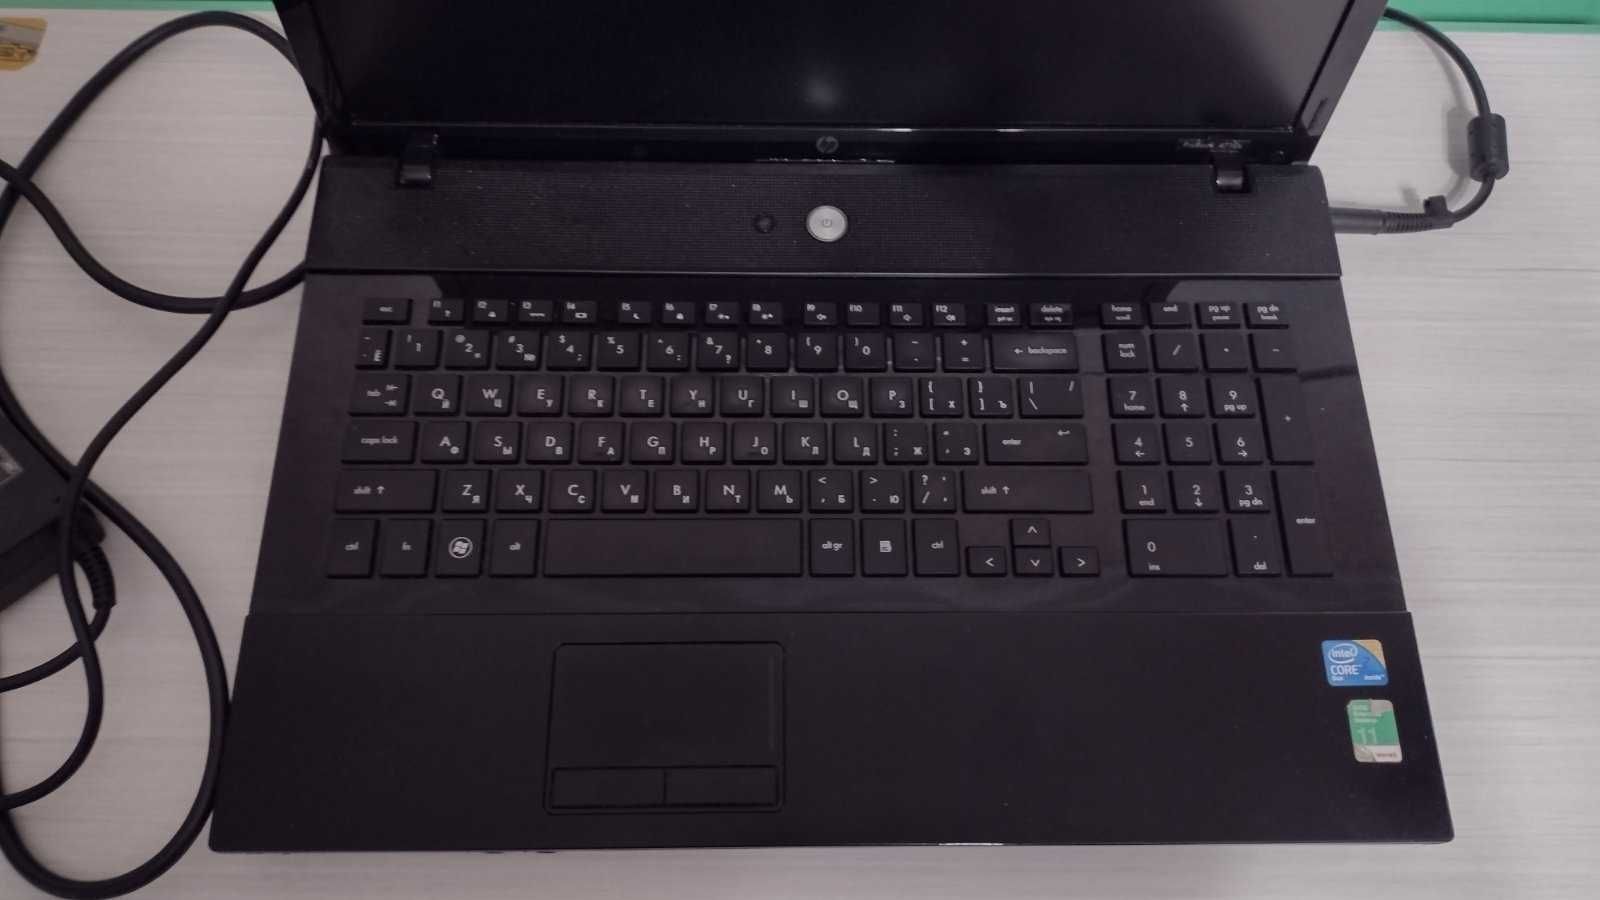 Ноутбук 17" HP Probook 4710s HDD500 3Gb Intel Core 2 Duo 2GHz